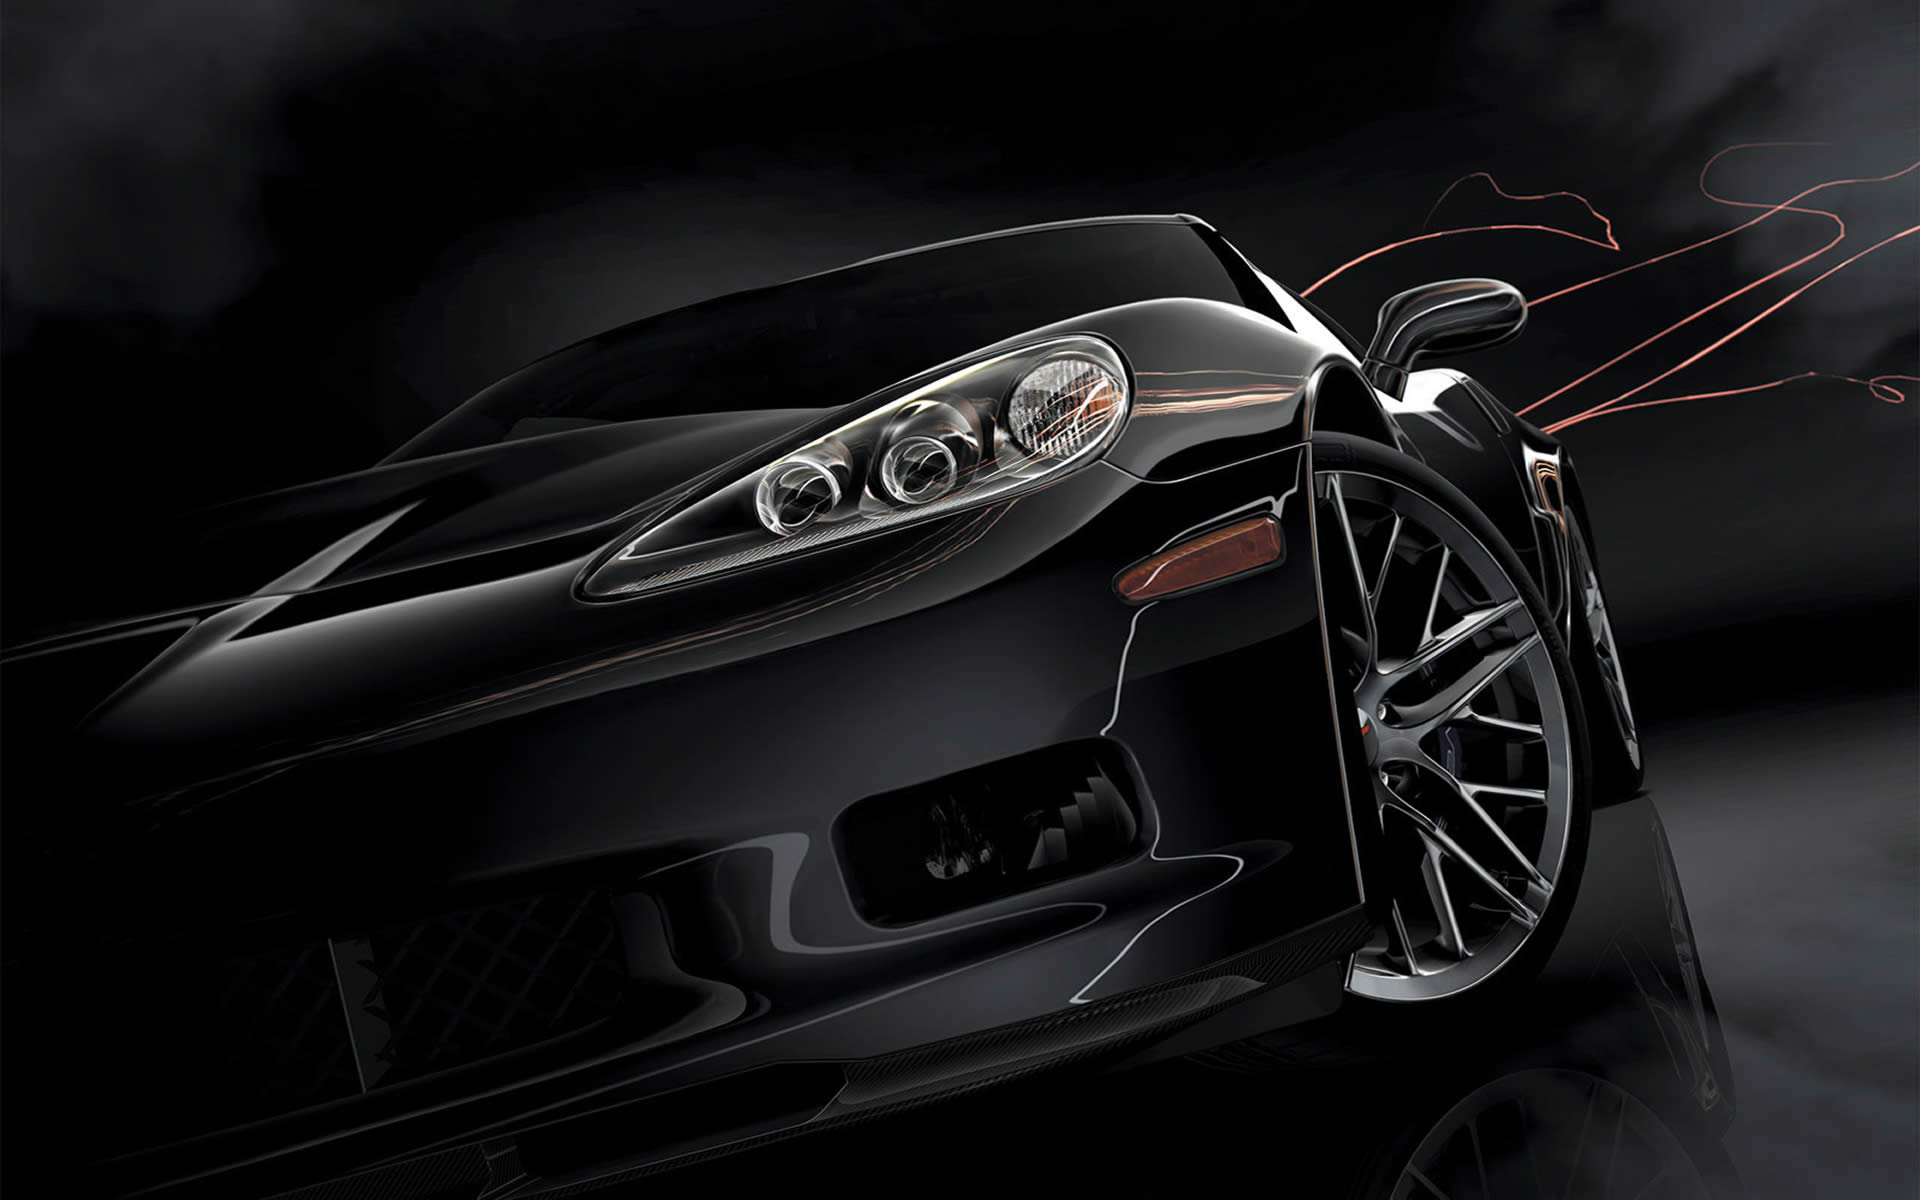 Black Car   Racing Games Wallpaper Image featuring Gran Turismo 5